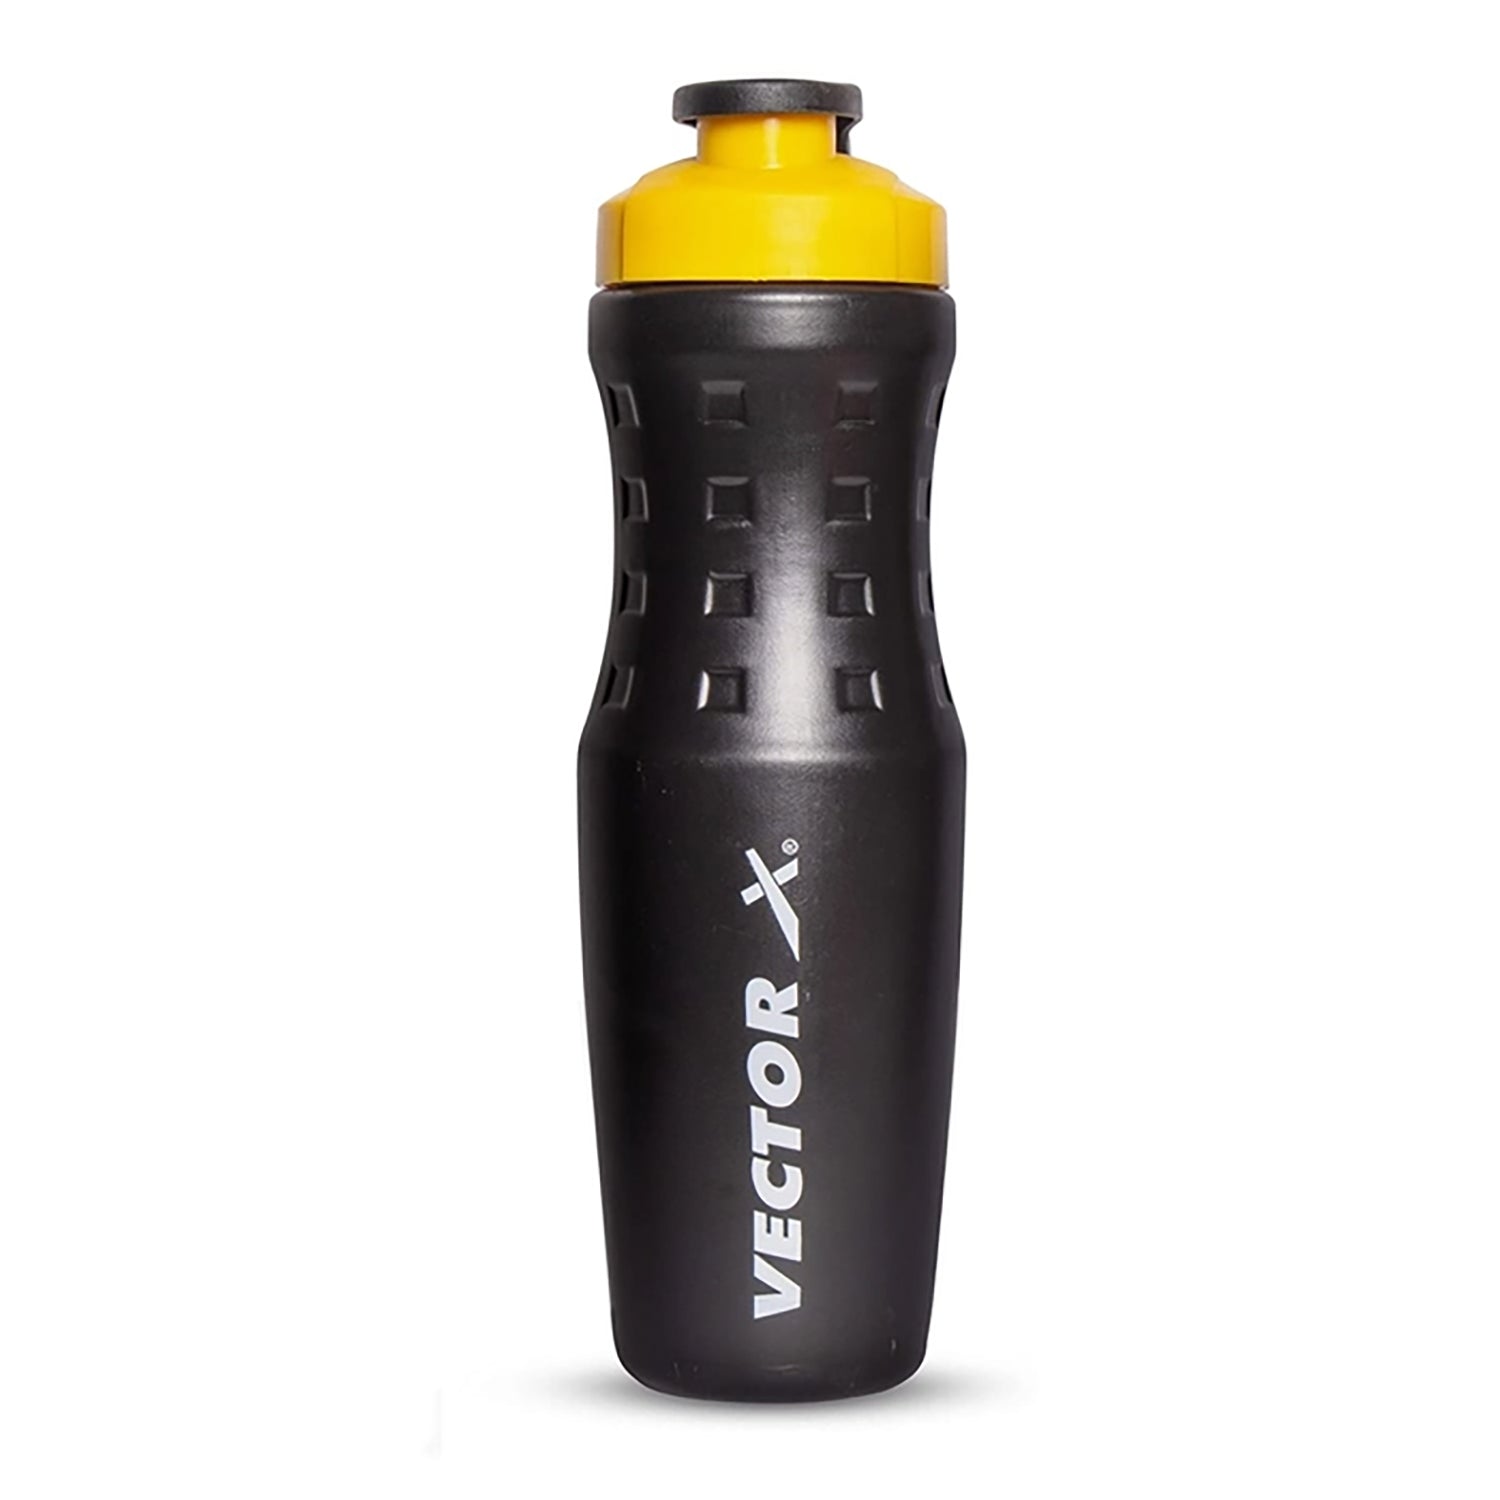 Vector X Active 740 ml Sipper (Black/Yellow) - Best Price online Prokicksports.com